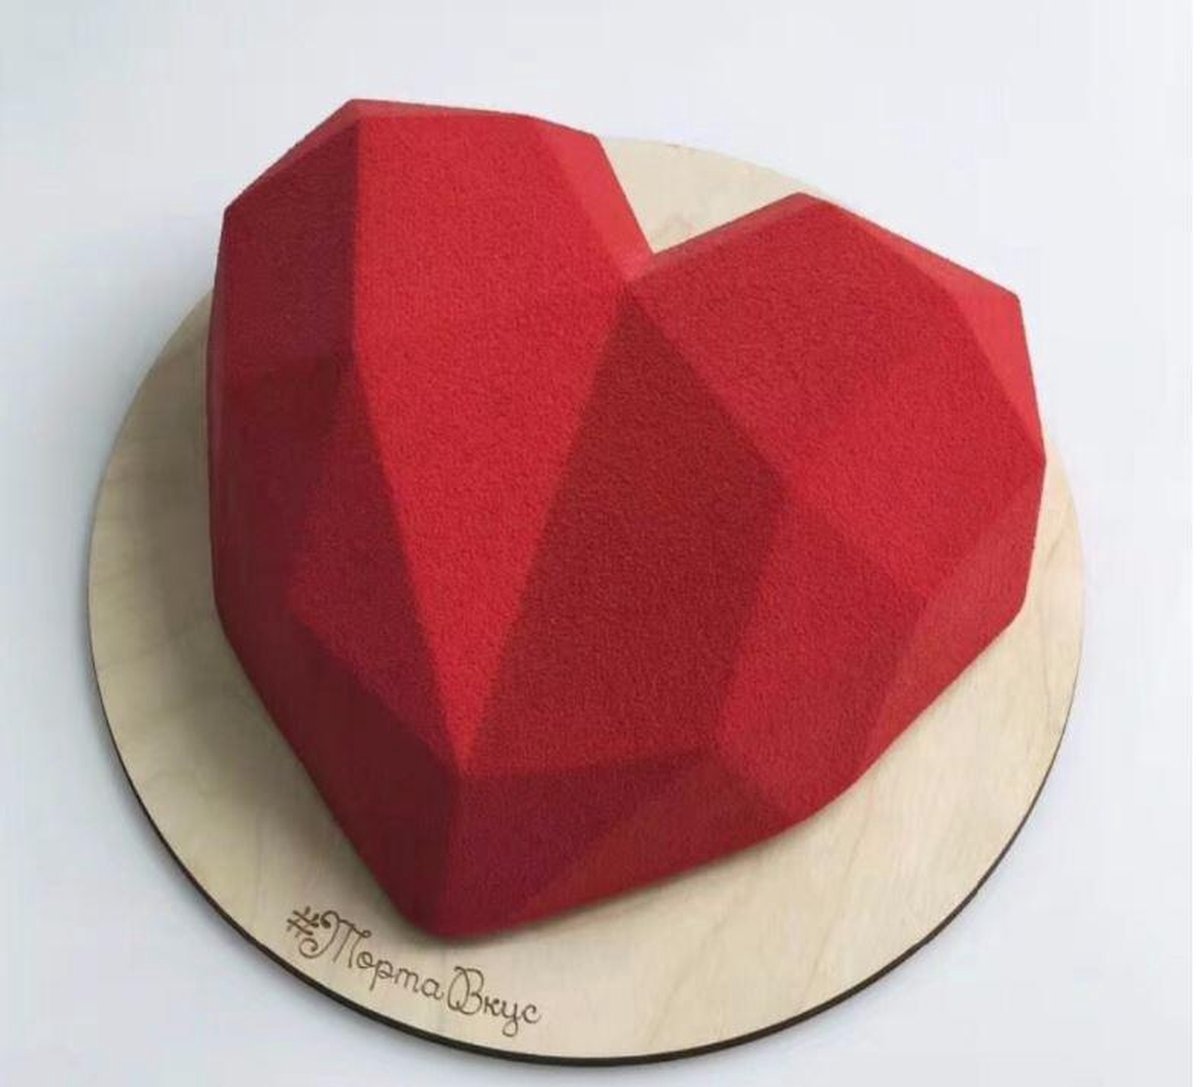 Akyol - Siliconen mal harten inclusief hamer - Chocolade - TikTok Famous - Diamanten hart- 3D - Bakvorm - Bonbons - Mold - Bakvormen - Smash Heart - Bakken - Koken - Valentijn hart - Keukengerei - Keukenaccessoires - Liefde